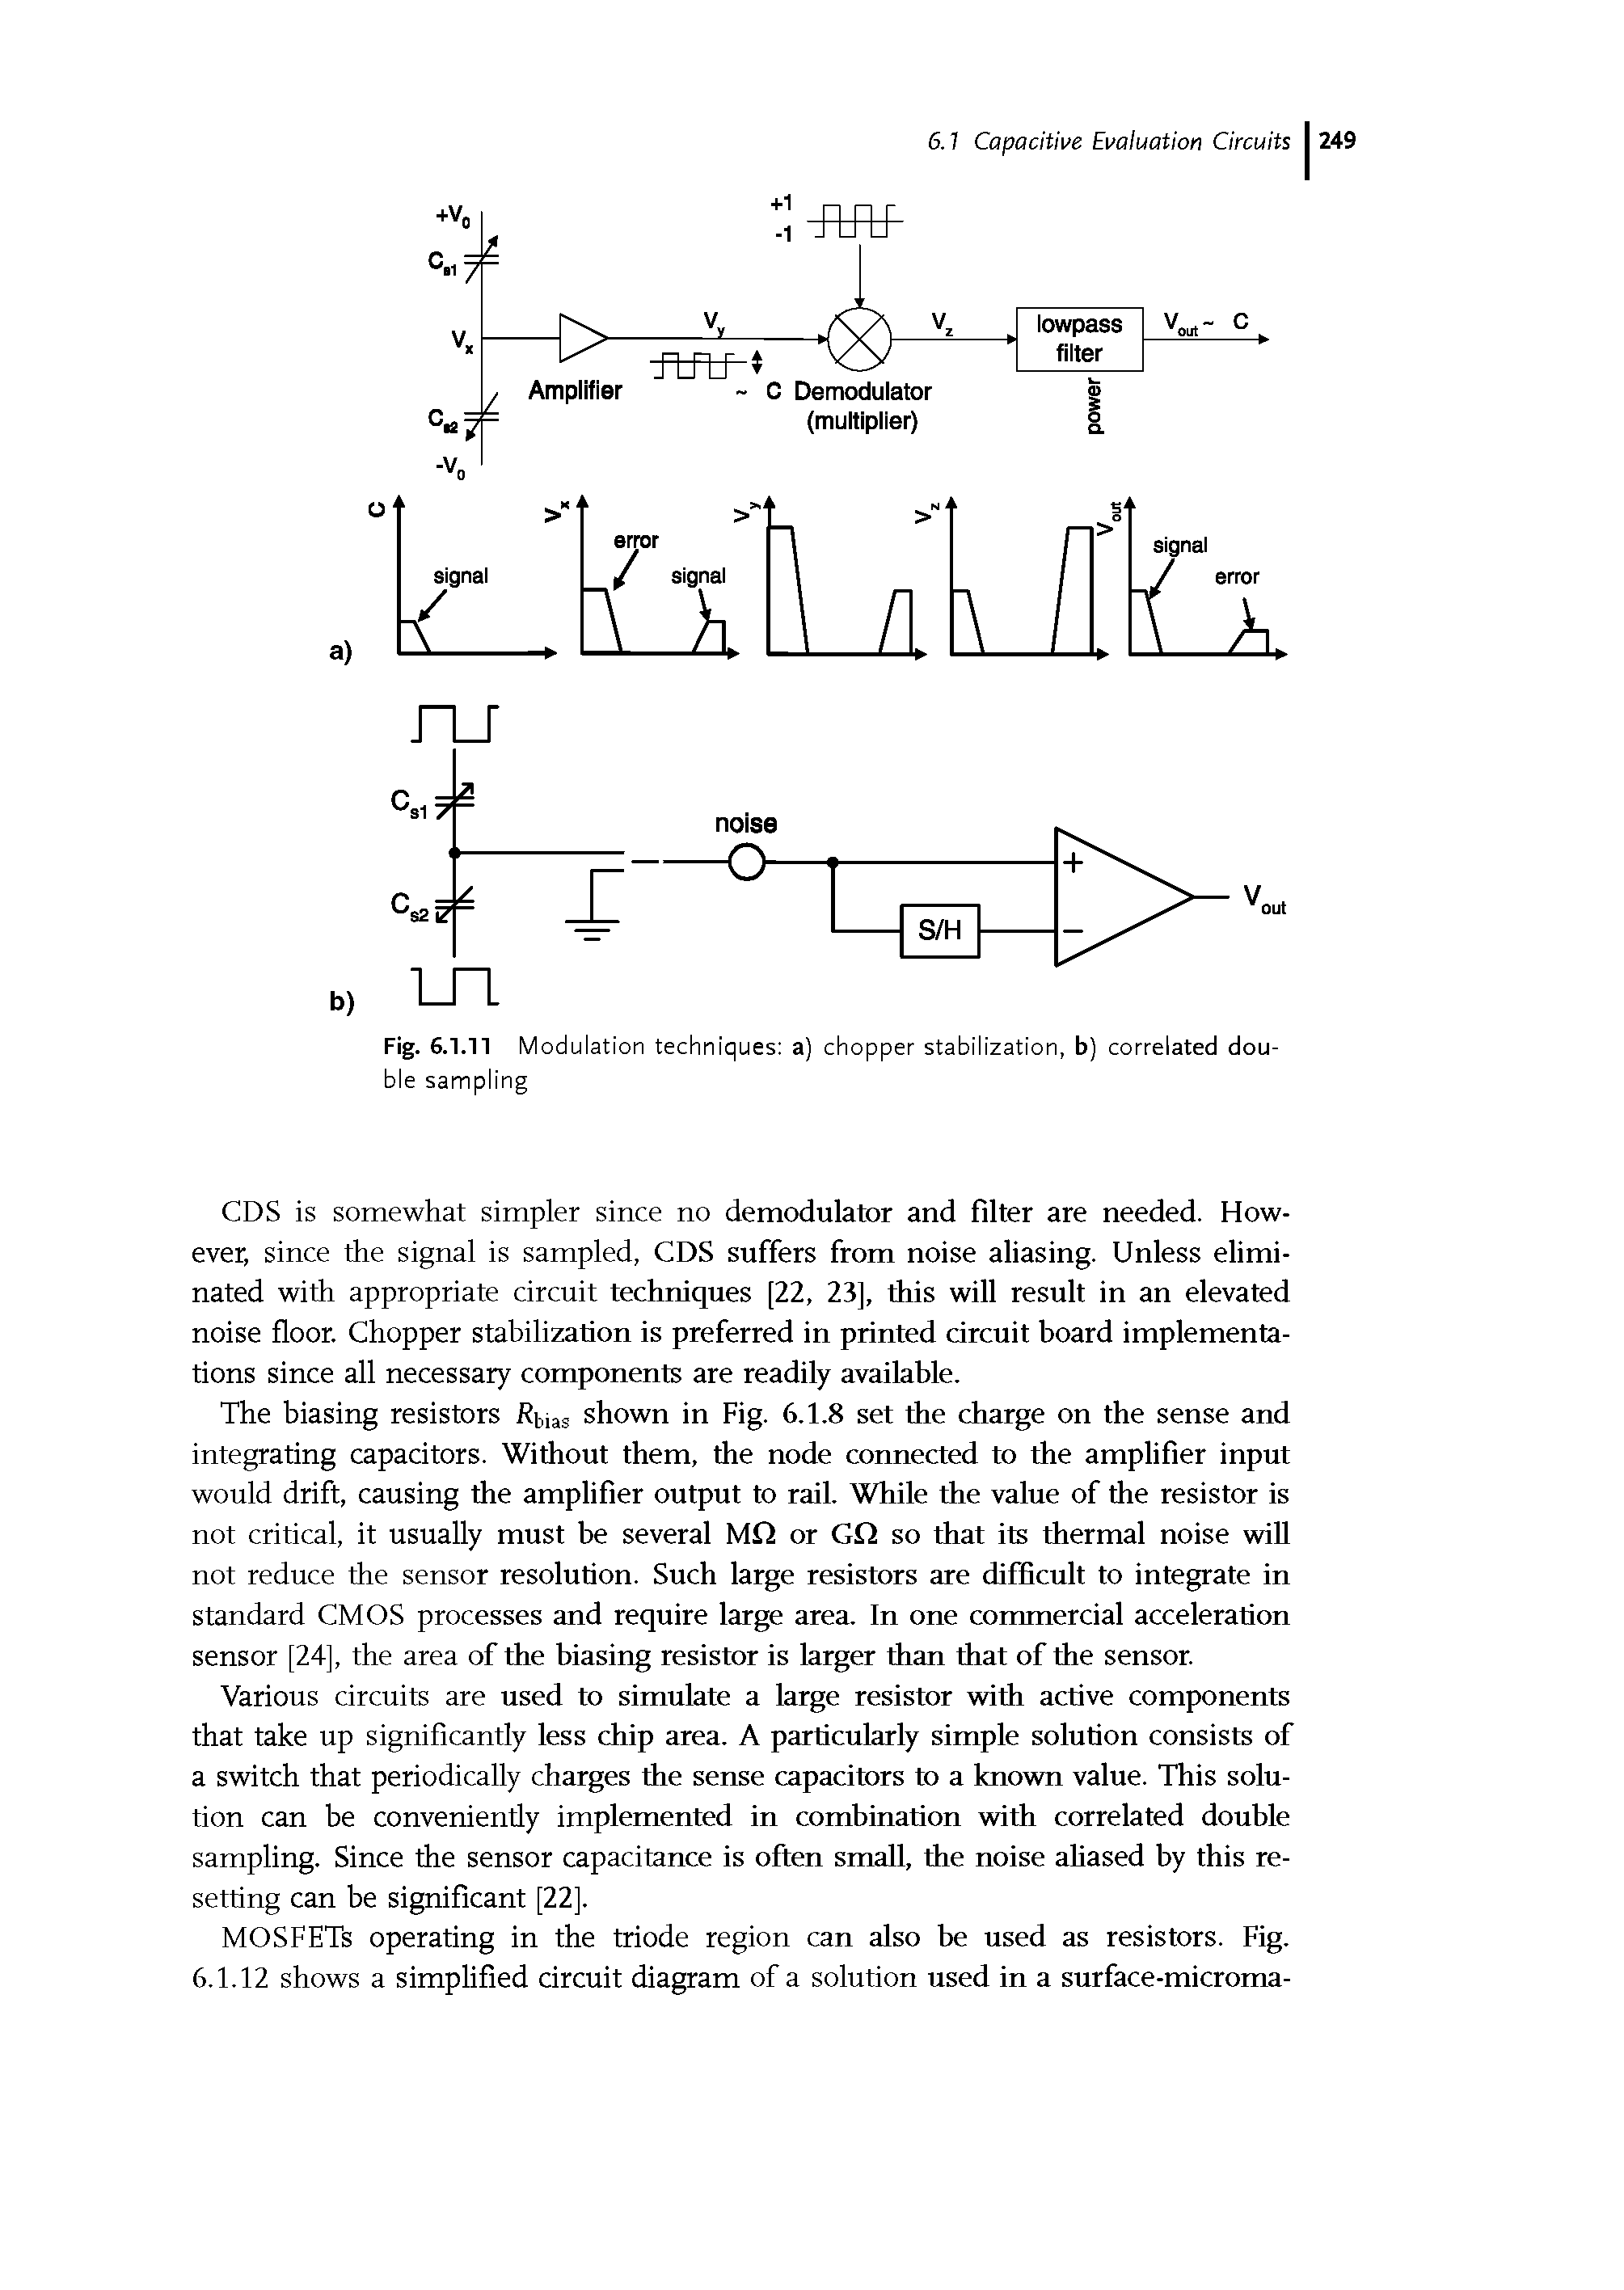 Fig. 6.1.11 Modulation techniques a) chopper stabilization, b) correlated double sampling...